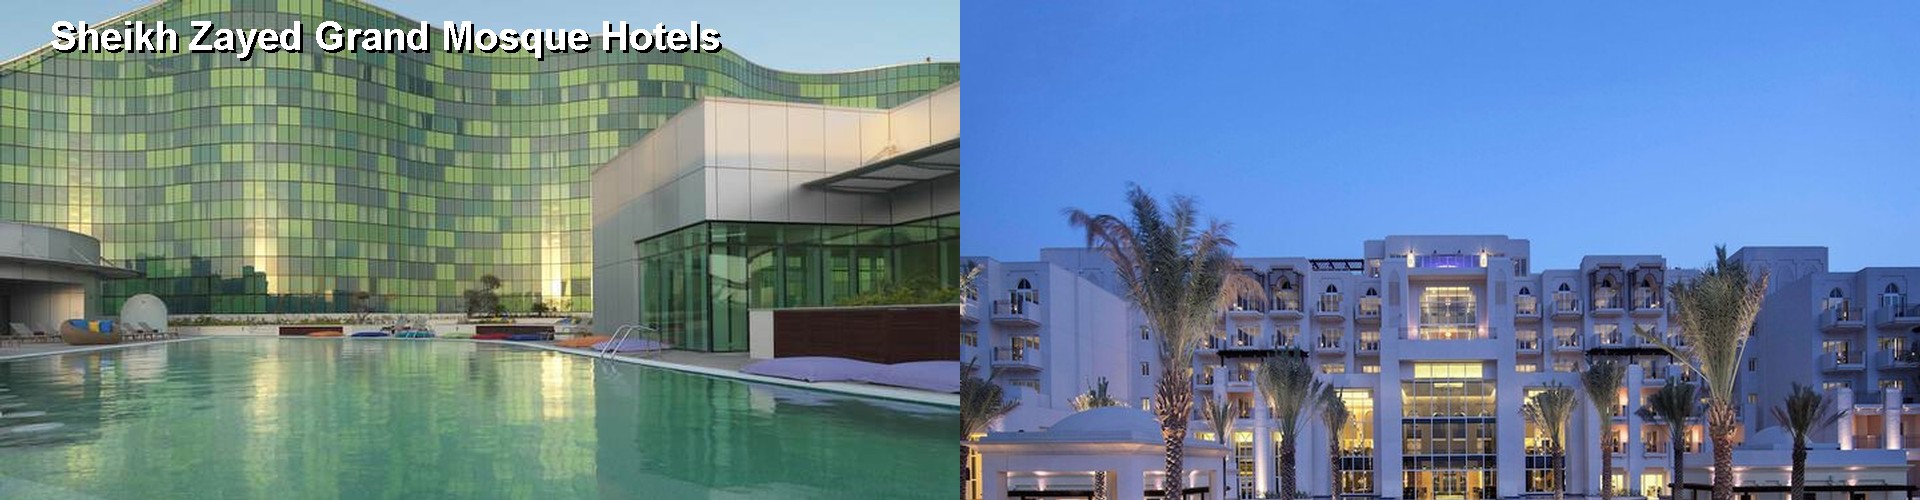 5 Best Hotels near Sheikh Zayed Grand Mosque